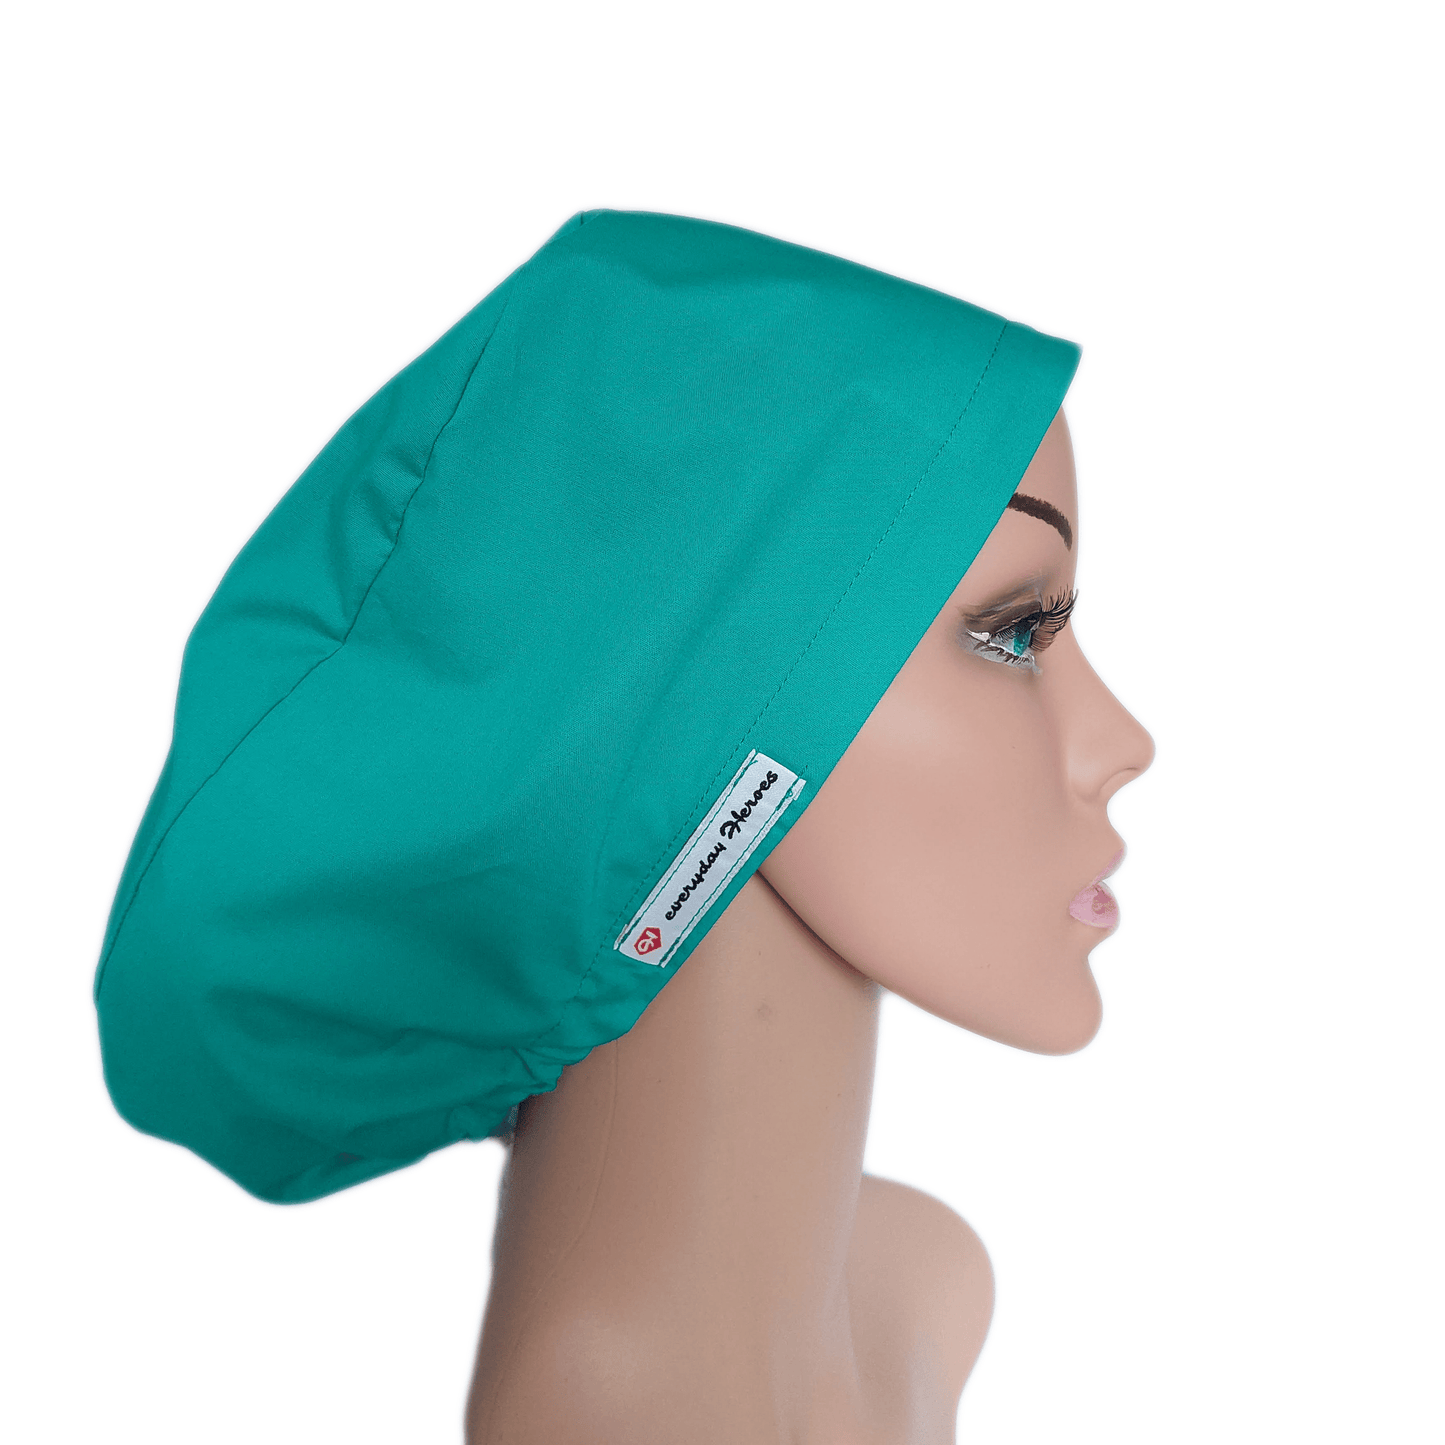 Scrub Cap -Surgical Cap Solid Emerald Green - [scrub_hat]-[scrub_cap_for_women]-[surgical_cap]